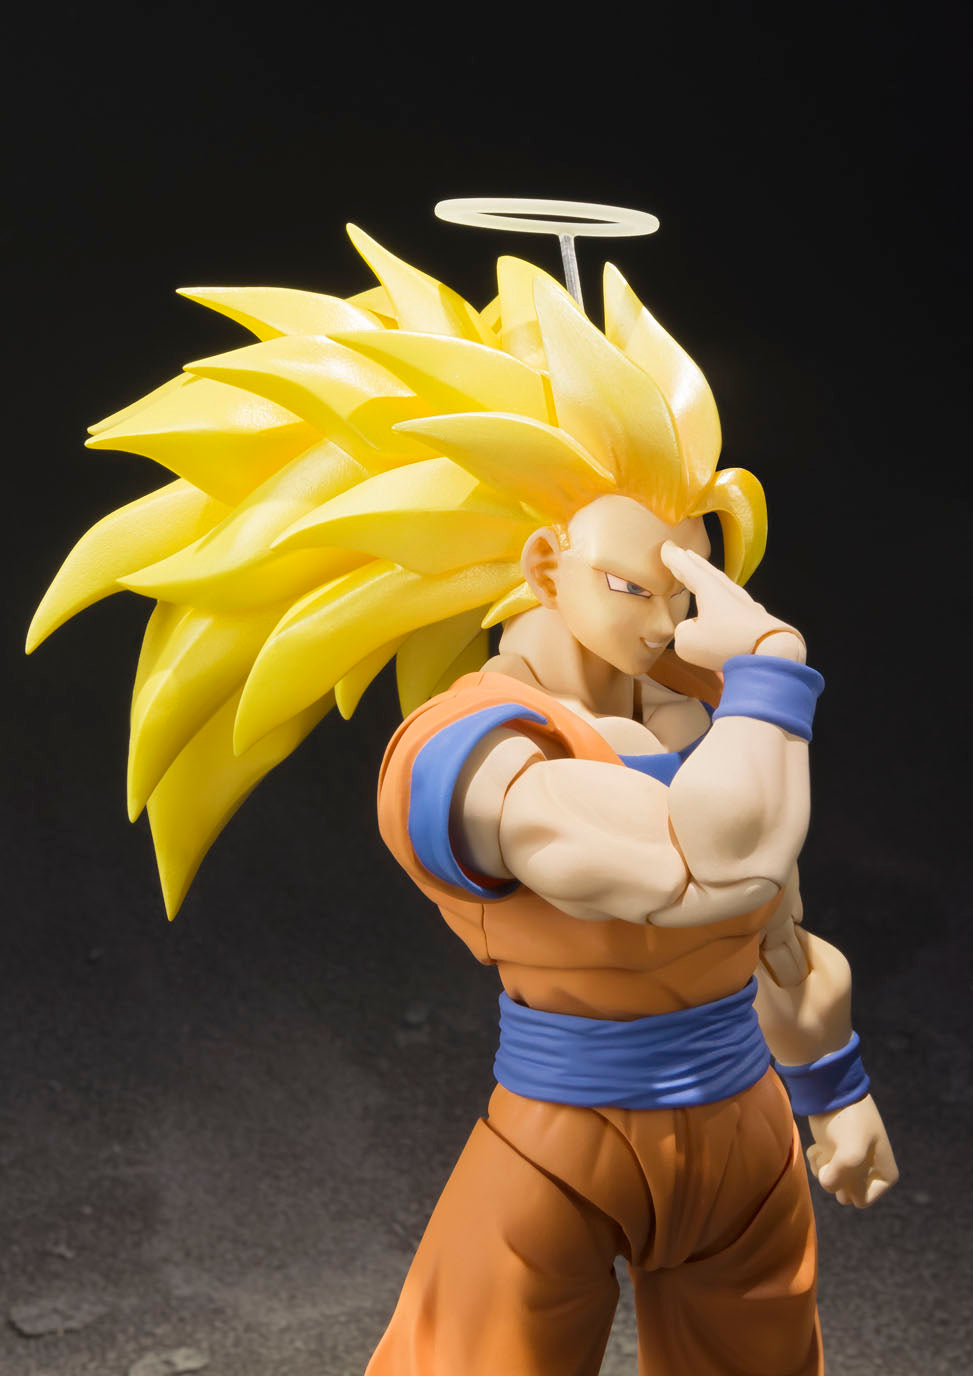 Super Saiyan 3 Goku "DRAGON BALL Z", TAMASHII NATIONS S.H.Figuarts 2 fingers on forehead pose